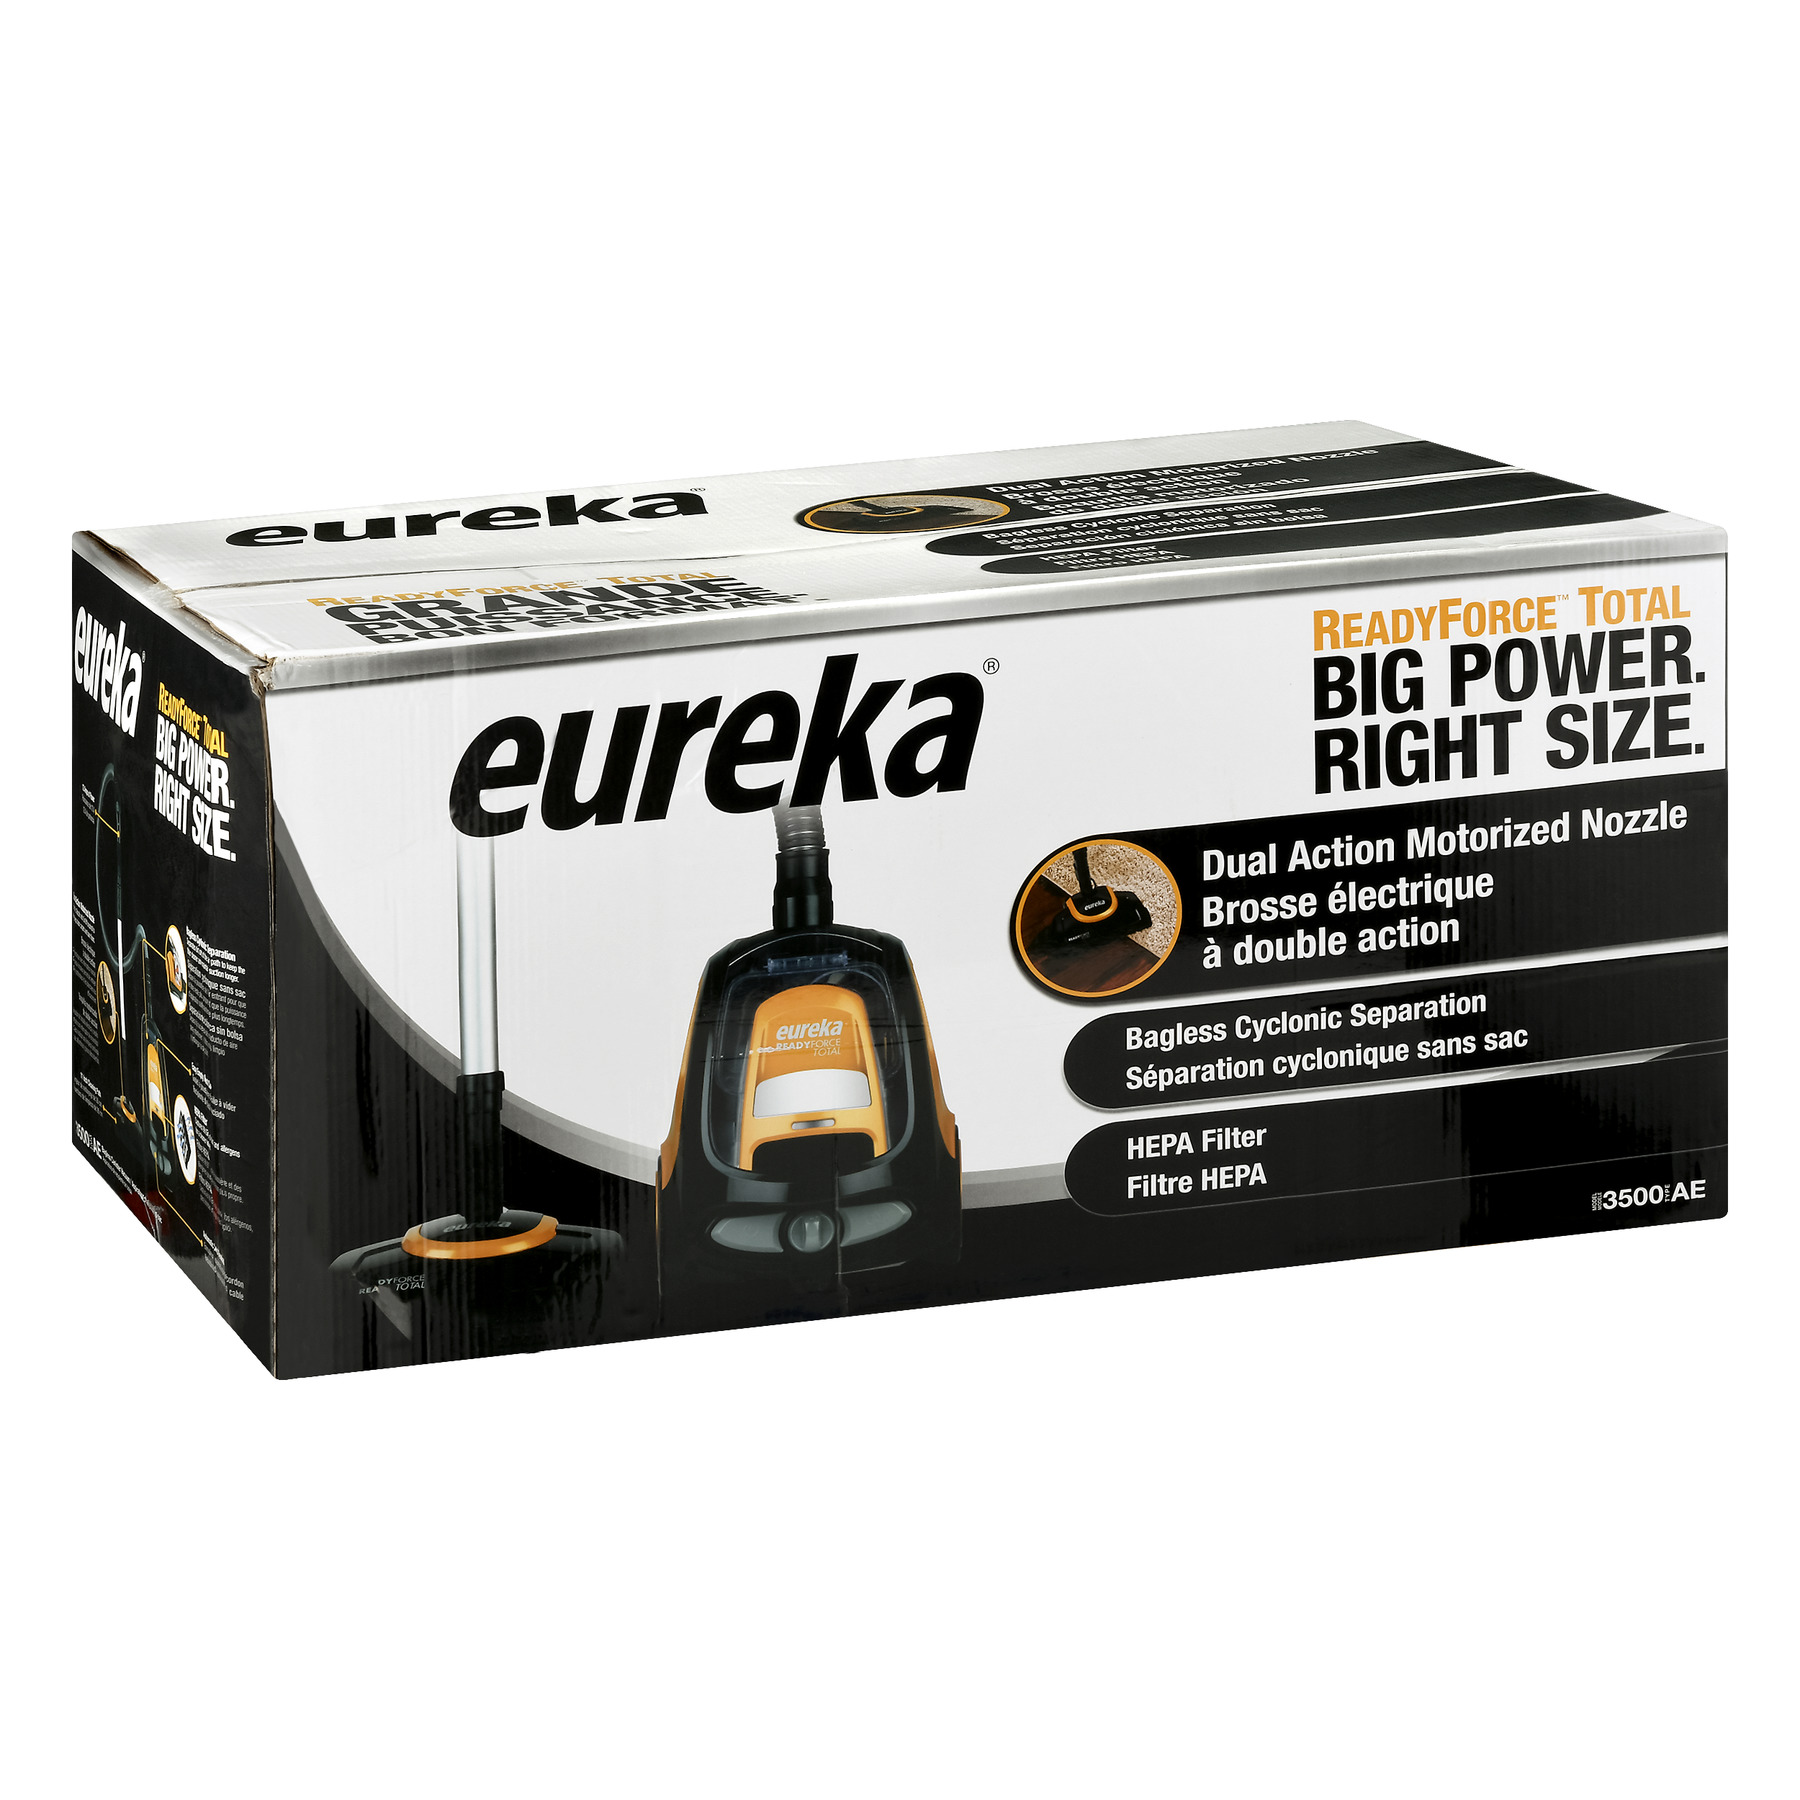 Eureka ReadyForce Total Bagless Canister Vacuum, 3500AE - image 2 of 7